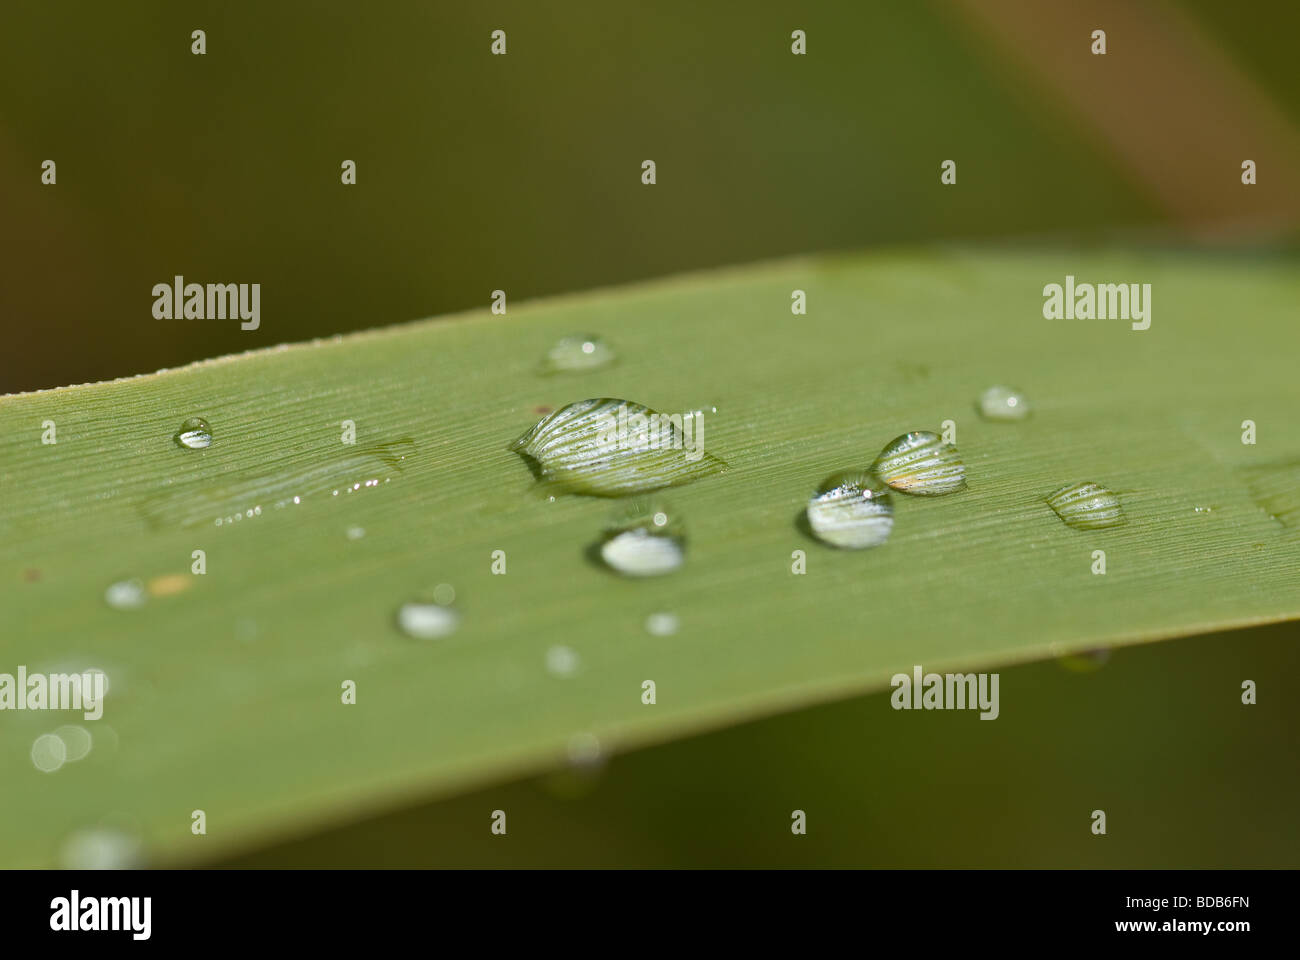 Macro photograph of multiple rain drops on a green grass leaf Stock Photo